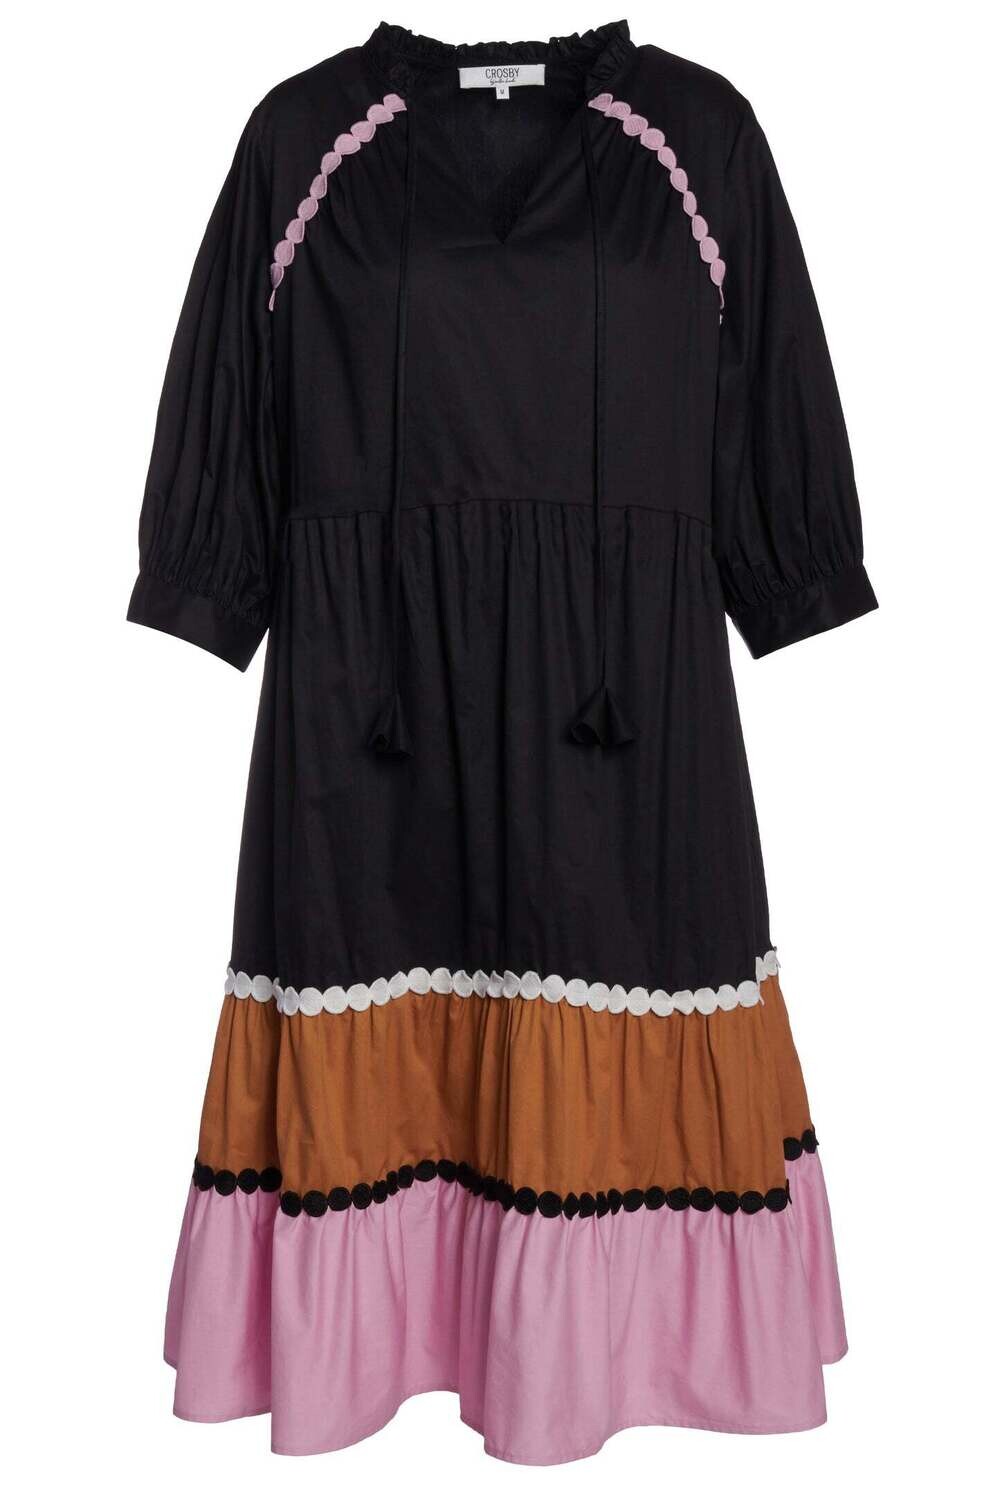 CROSBY Talulah Dress in Black